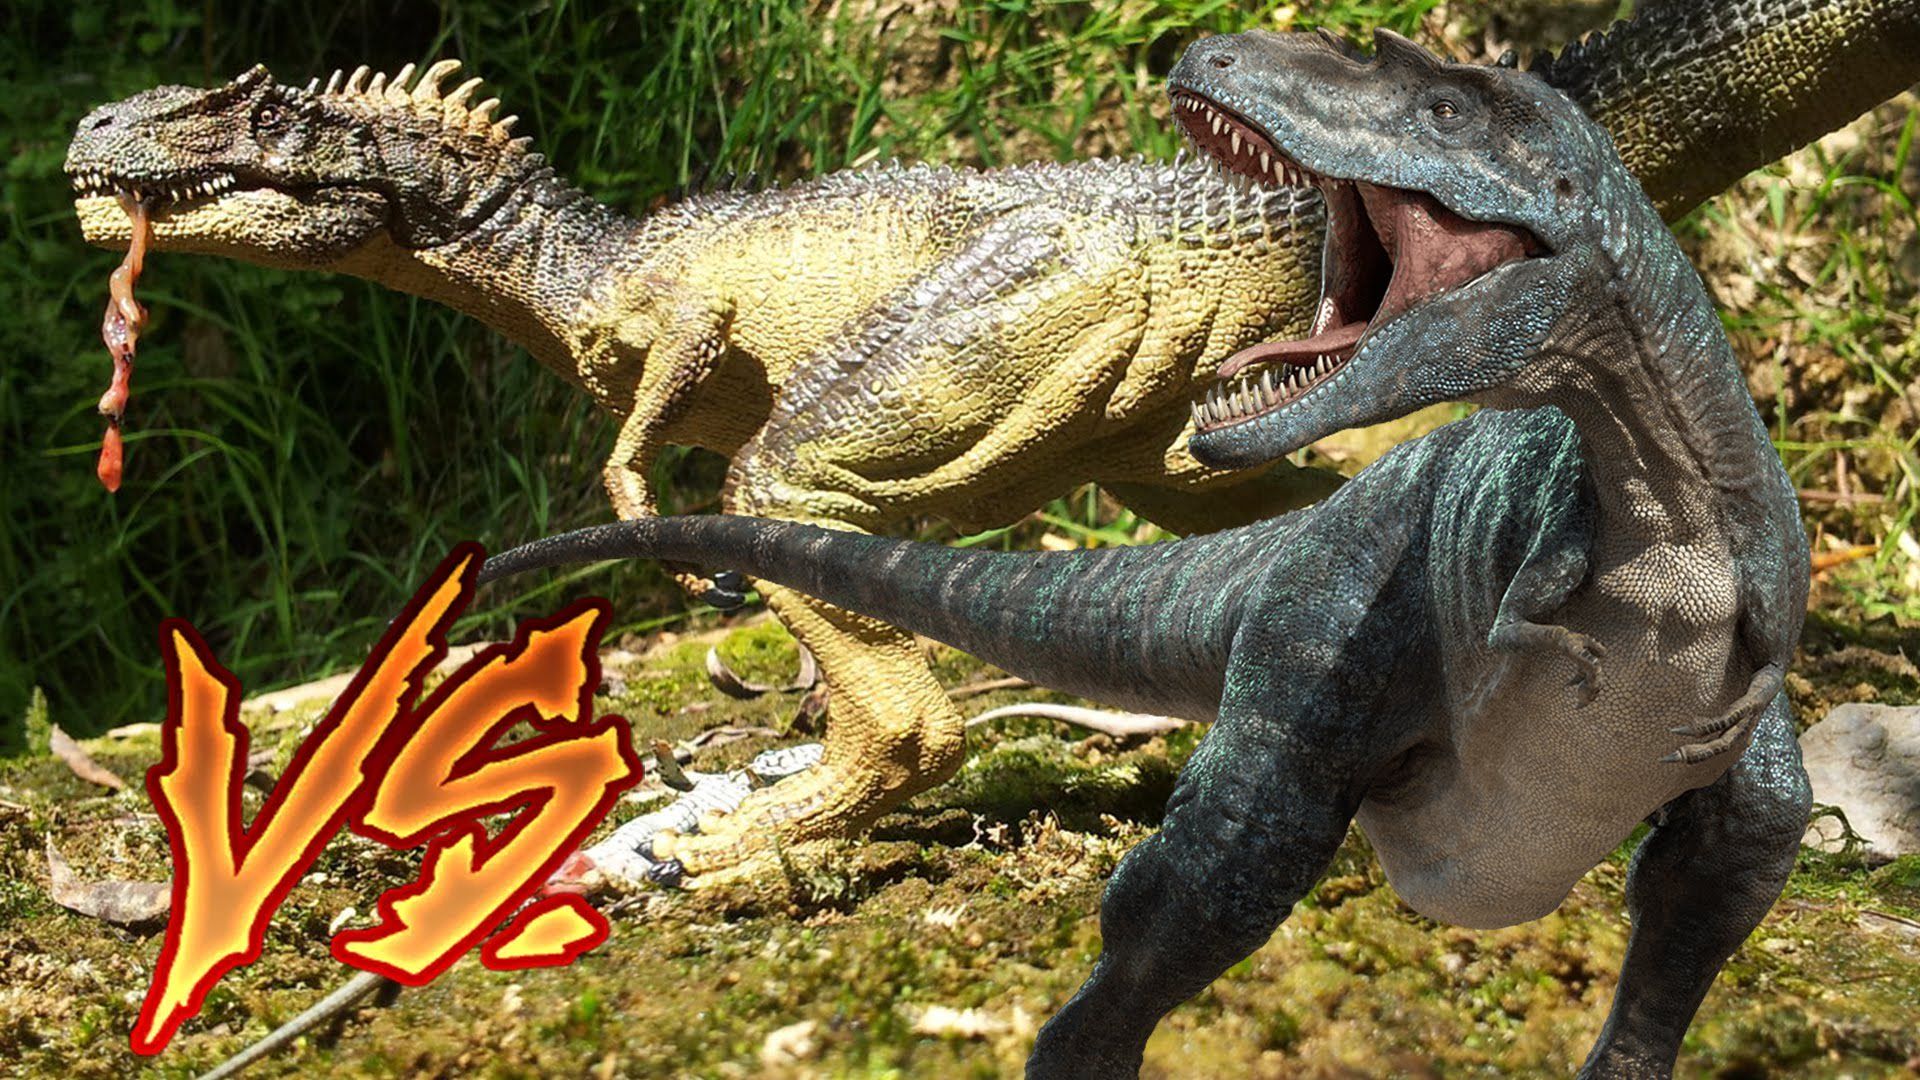 Who would win? vs Allosaurus